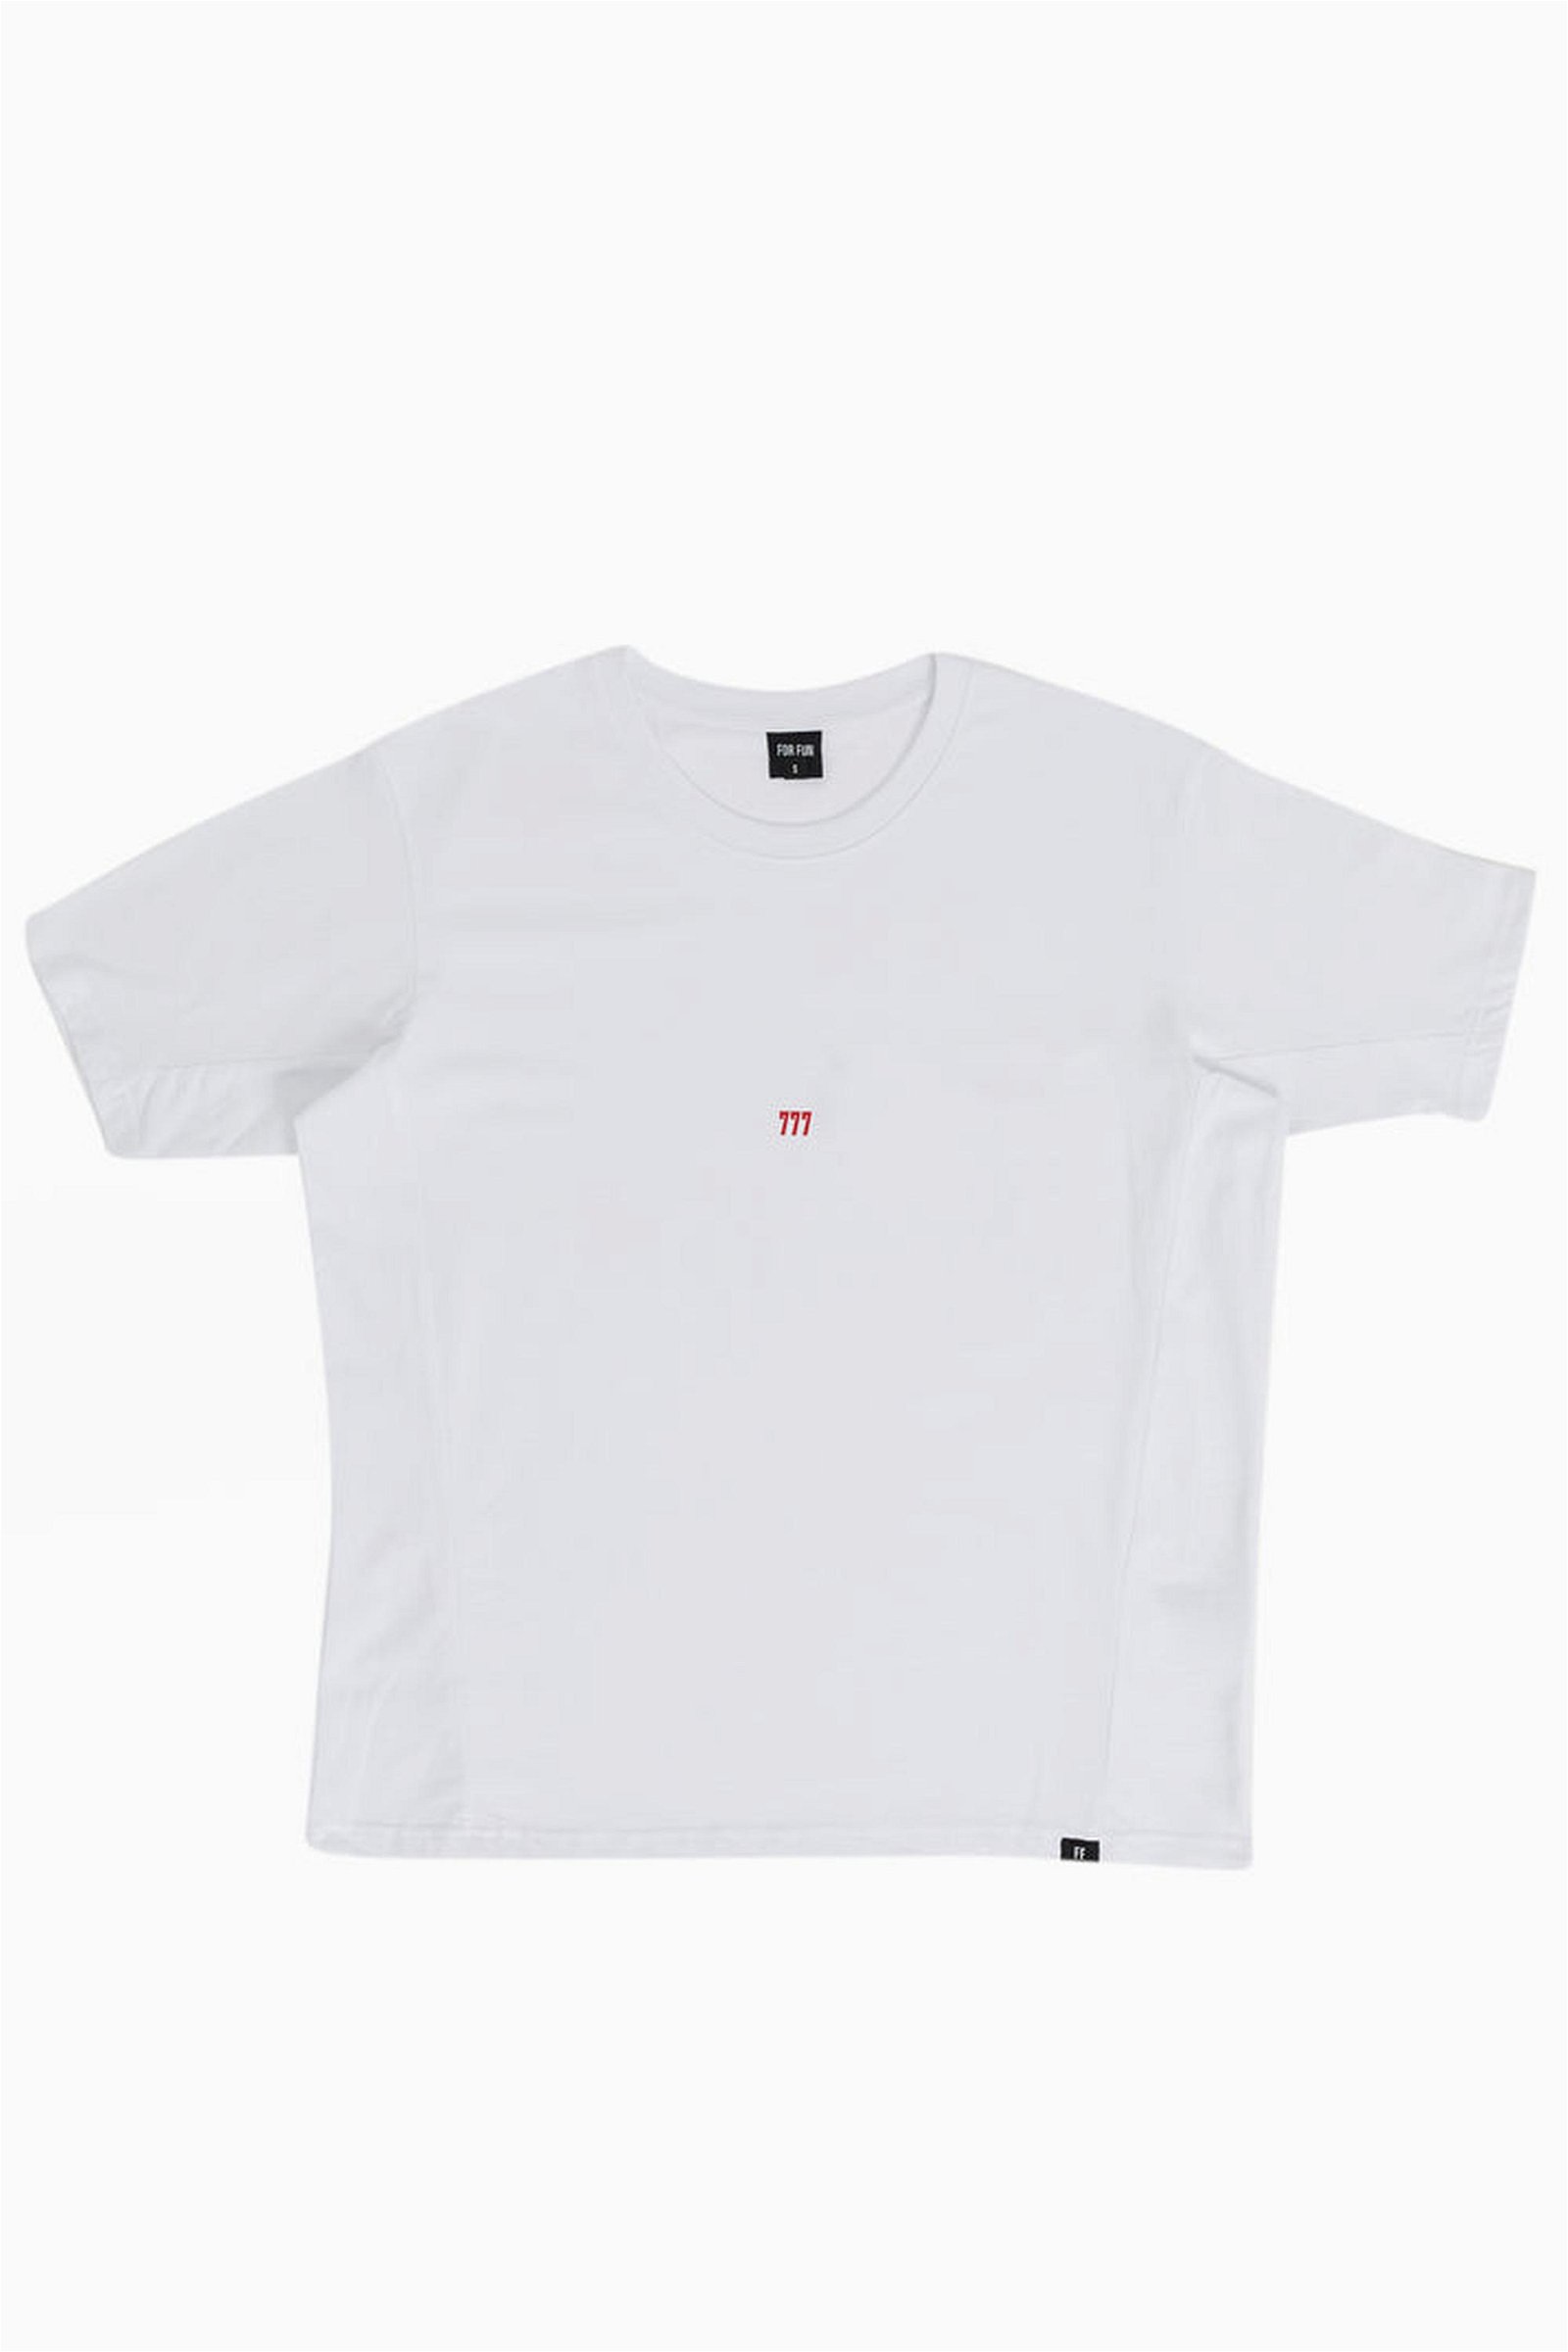 For Fun 777 Erkek Beyaz T-shirt